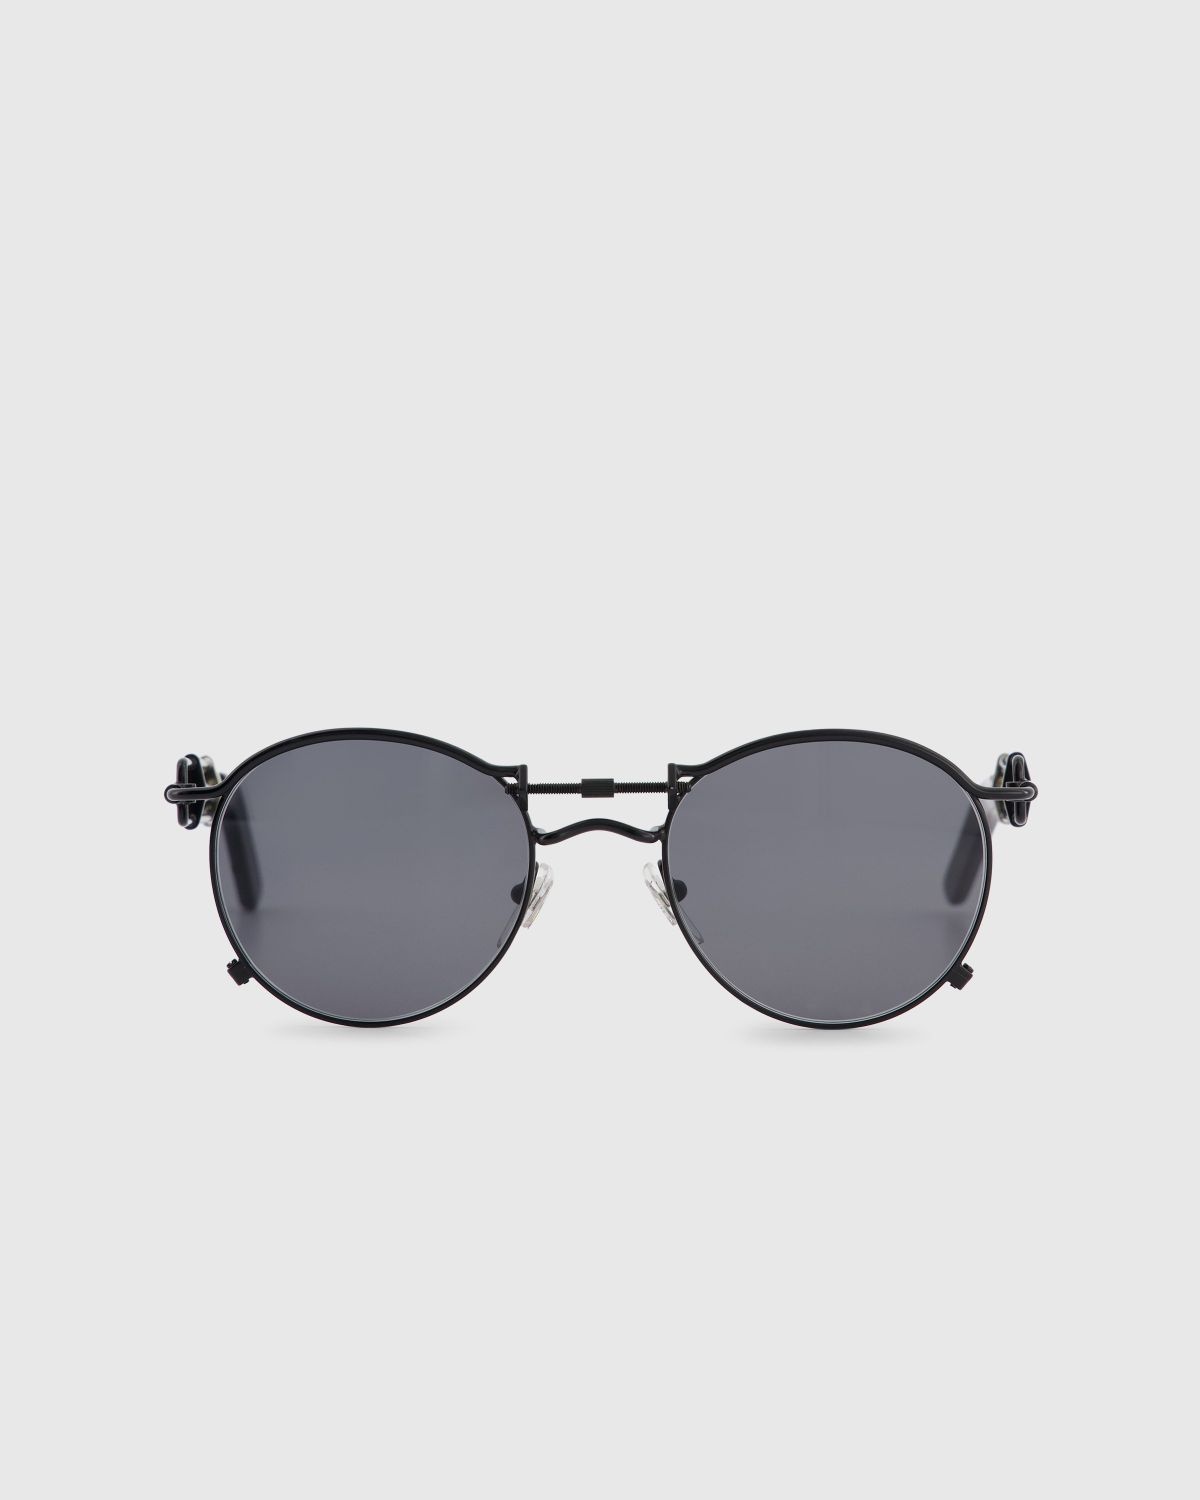 Jean Paul Gaultier x Burna Boy – 56-0174 Pas De Vis Sunglasses Black - 1